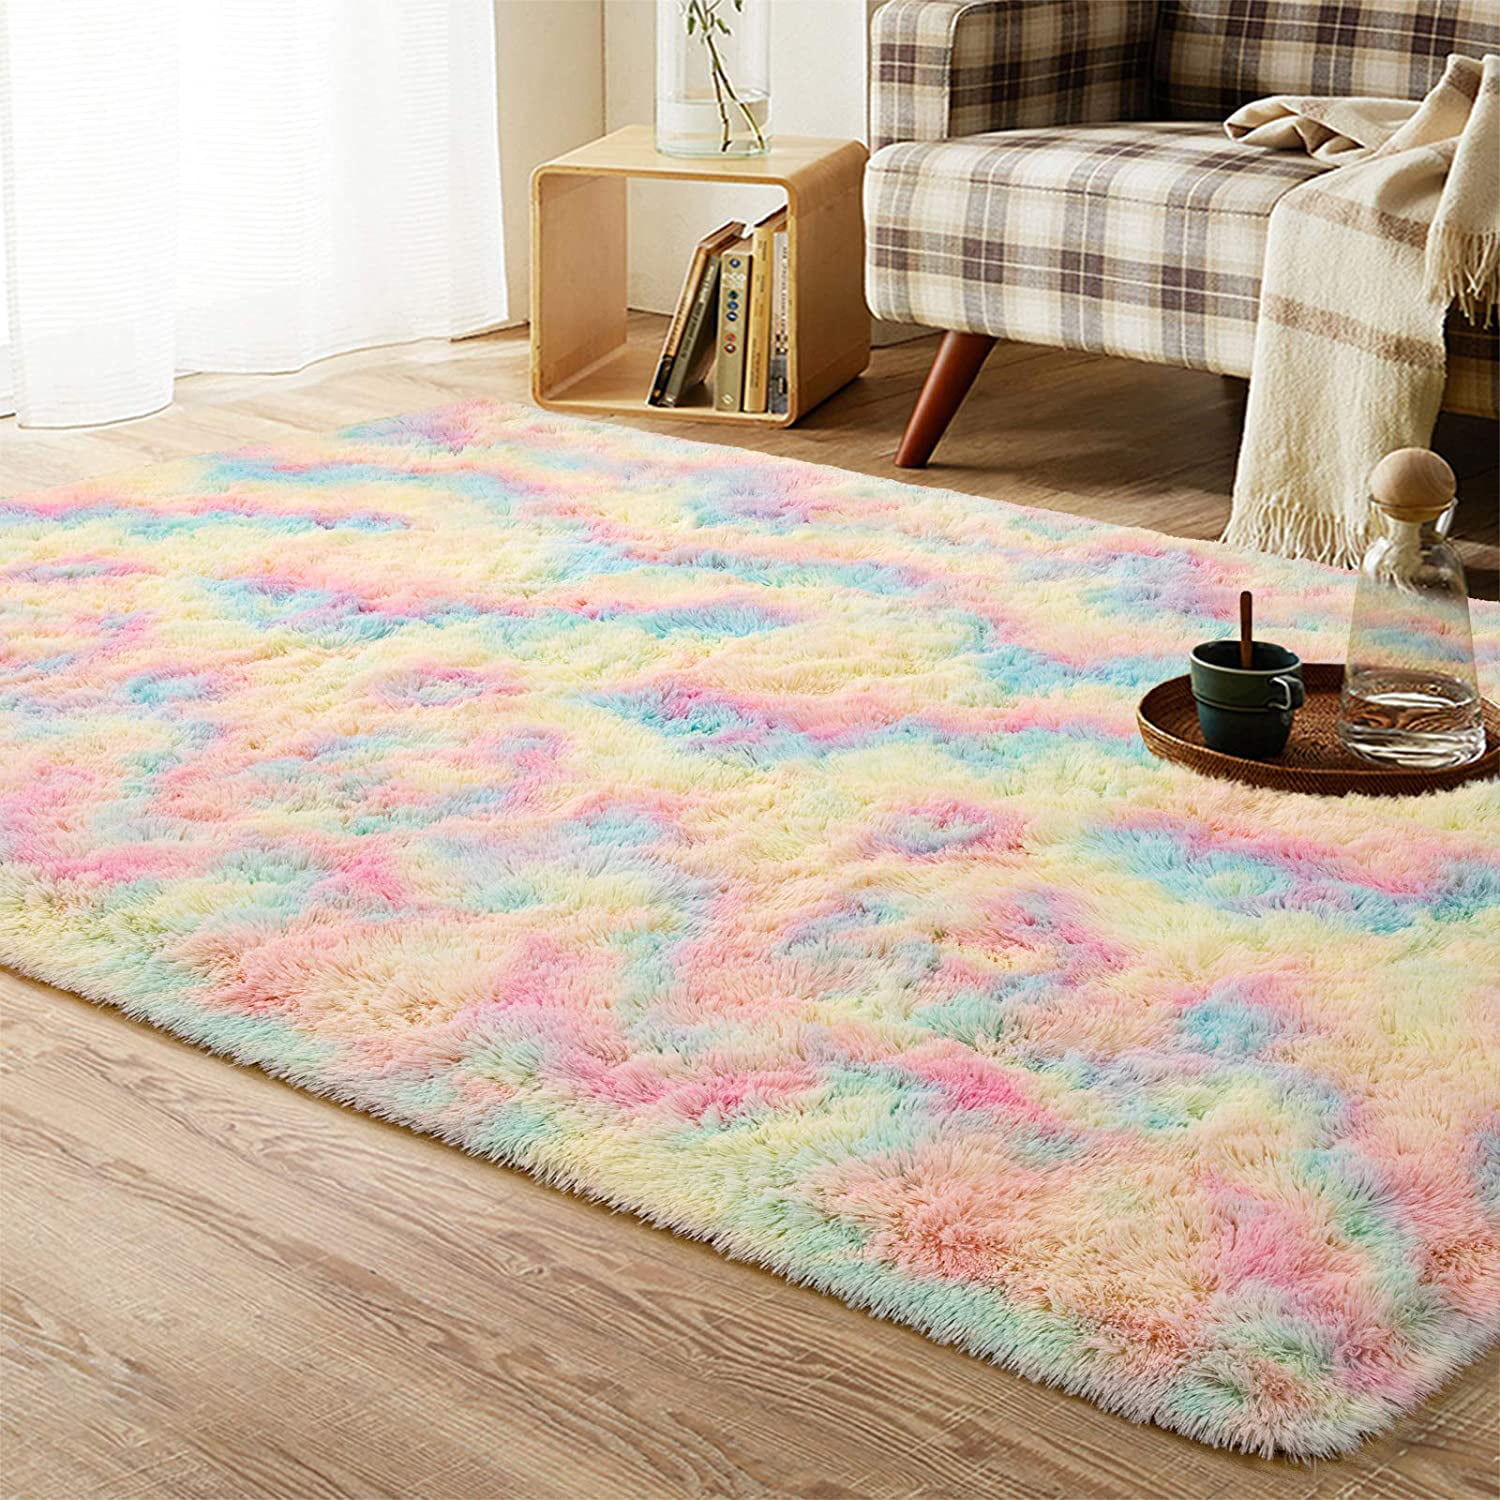 Details about   ISEAU Fluffy Rug Carpets Soft Shaggy Area Rug Indoor Floor Rugs for Kids Room Fu 